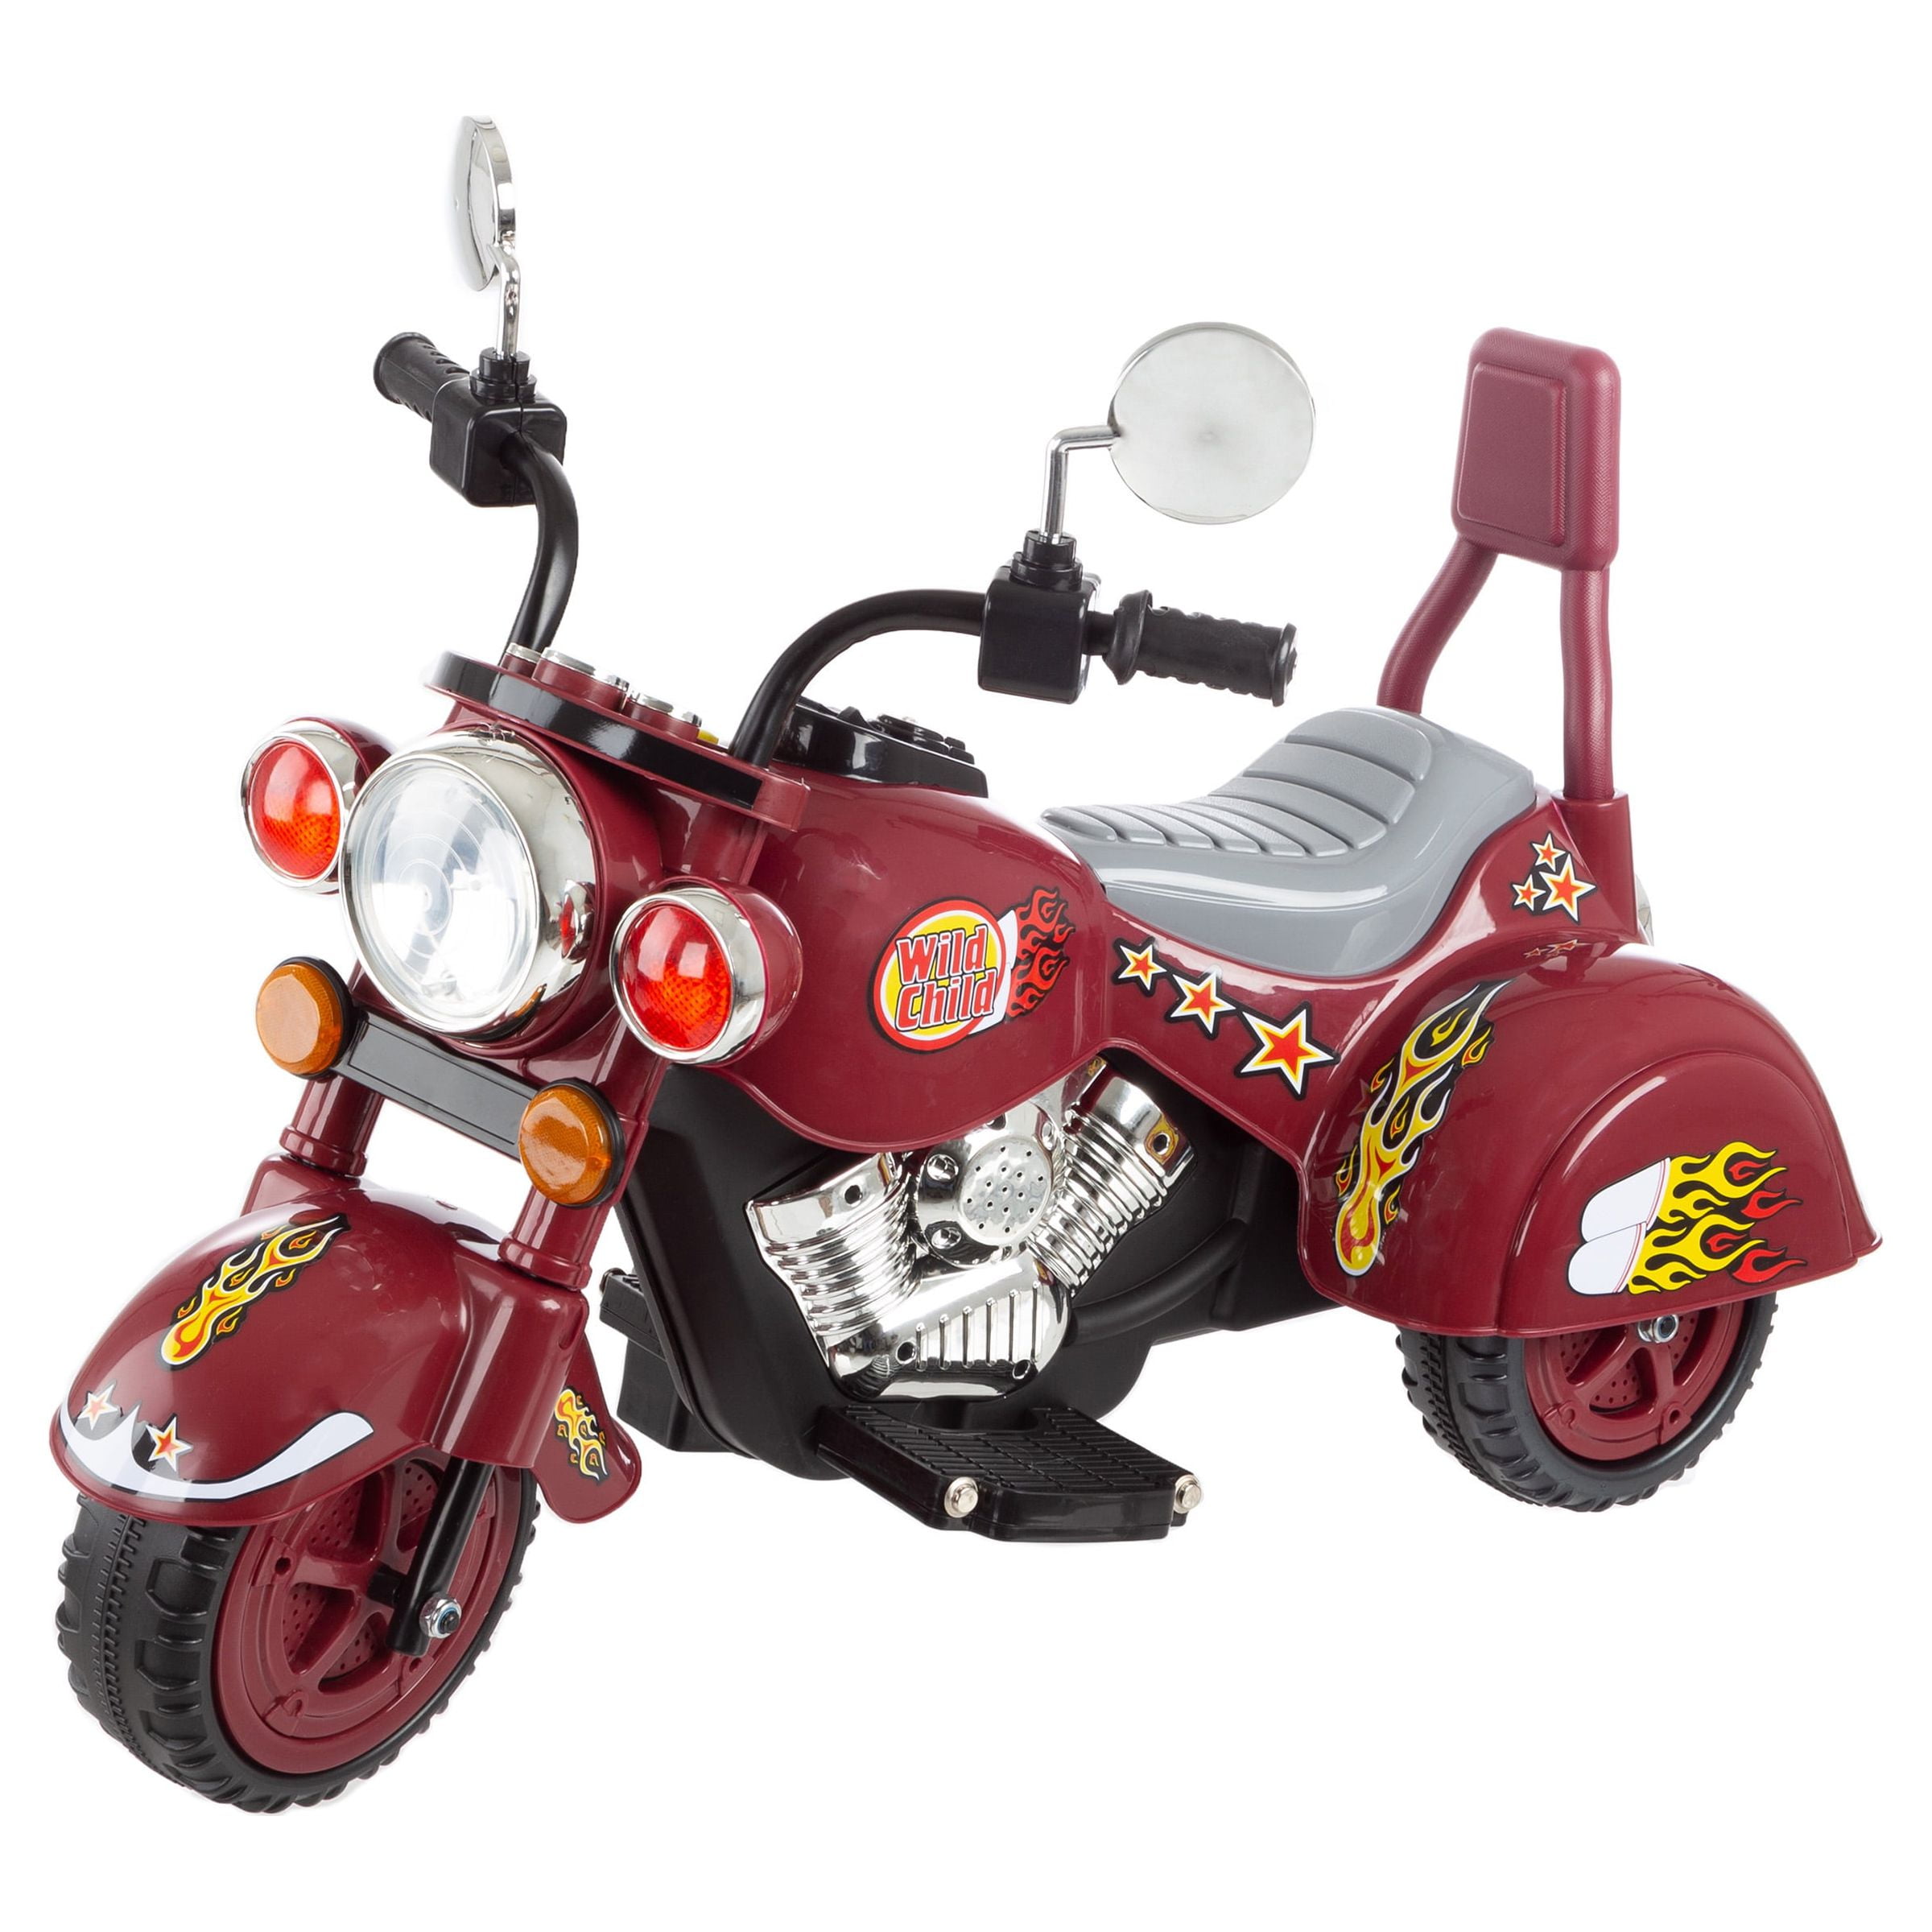 Trike Chopper Motorcycle